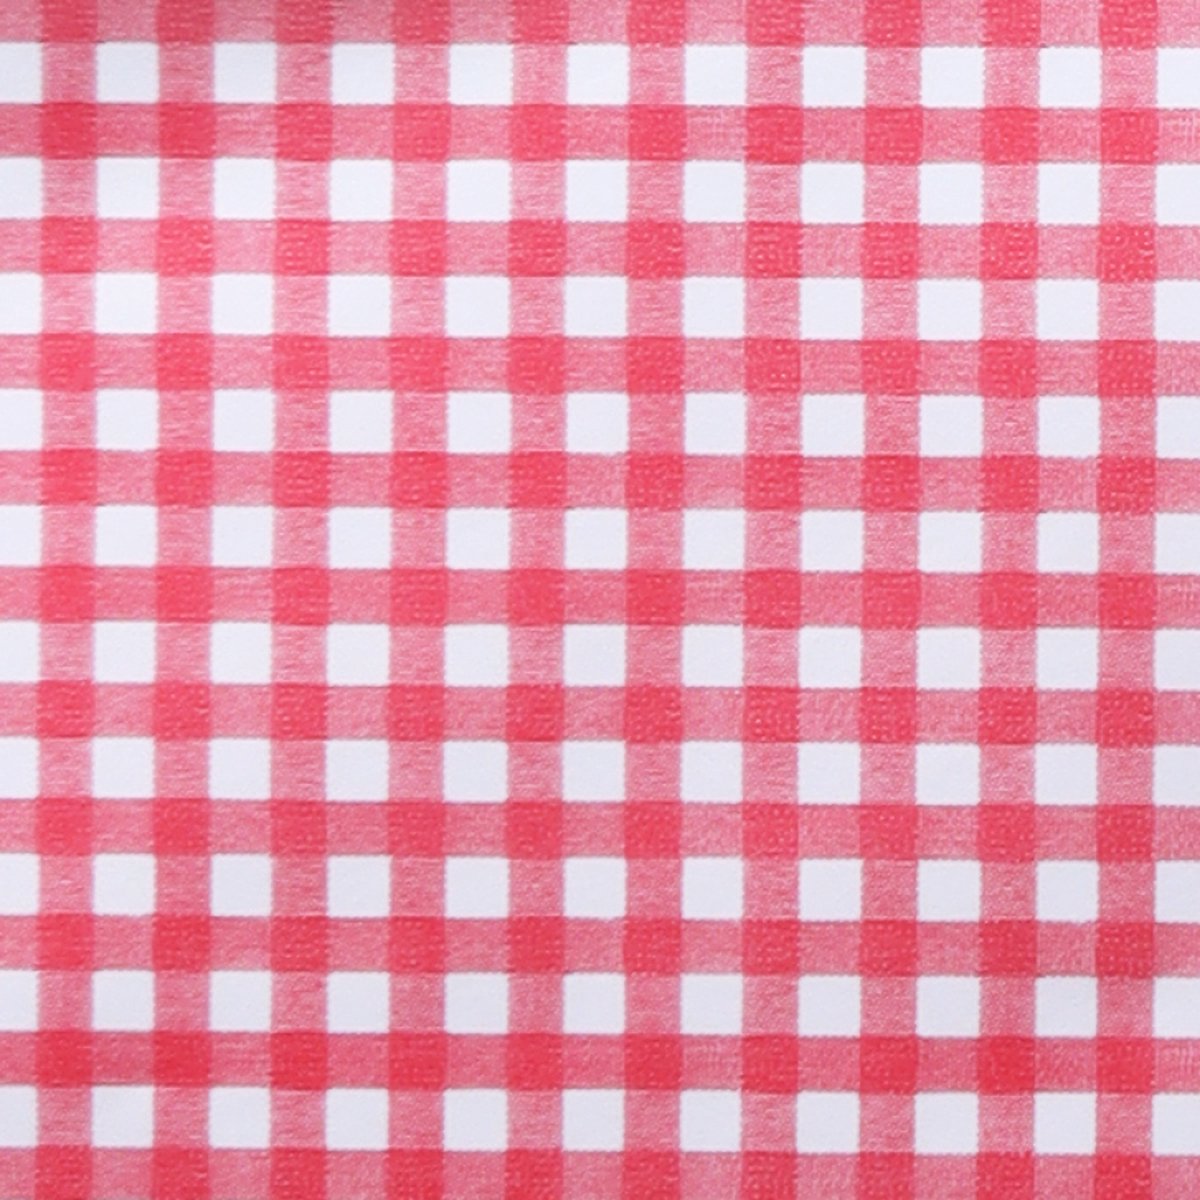 Tafelzeil/Tafelzeil boeren rood/wit (Premium kwaliteit)... bol.com